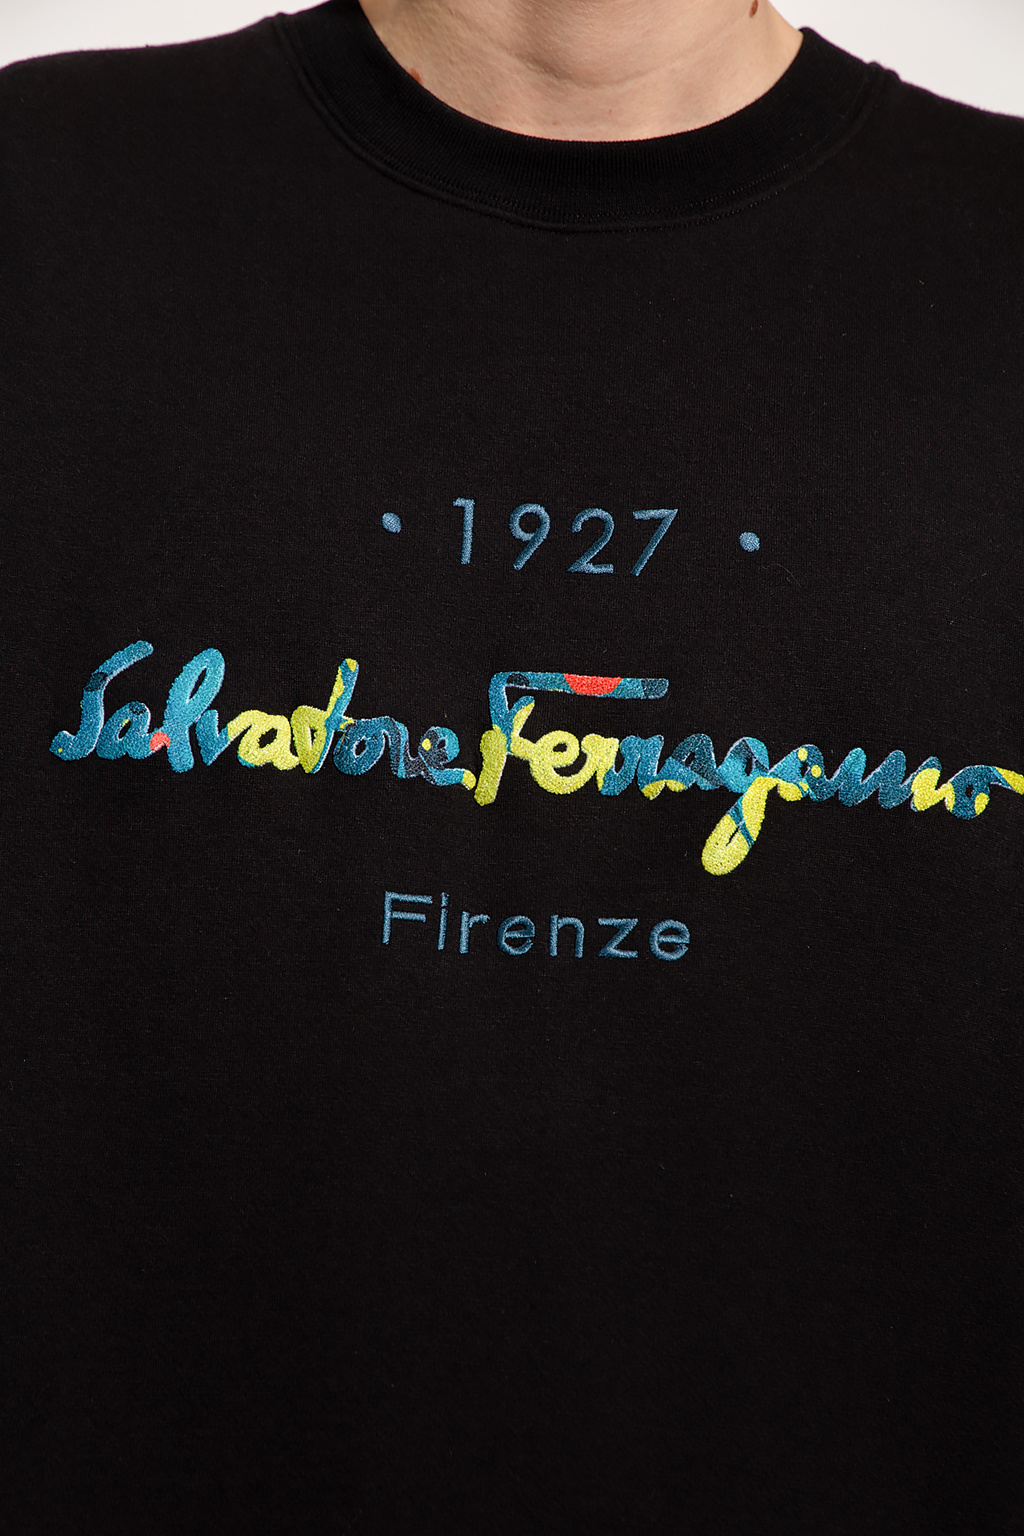 Salvatore Ferragamo Sweatshirt with logo